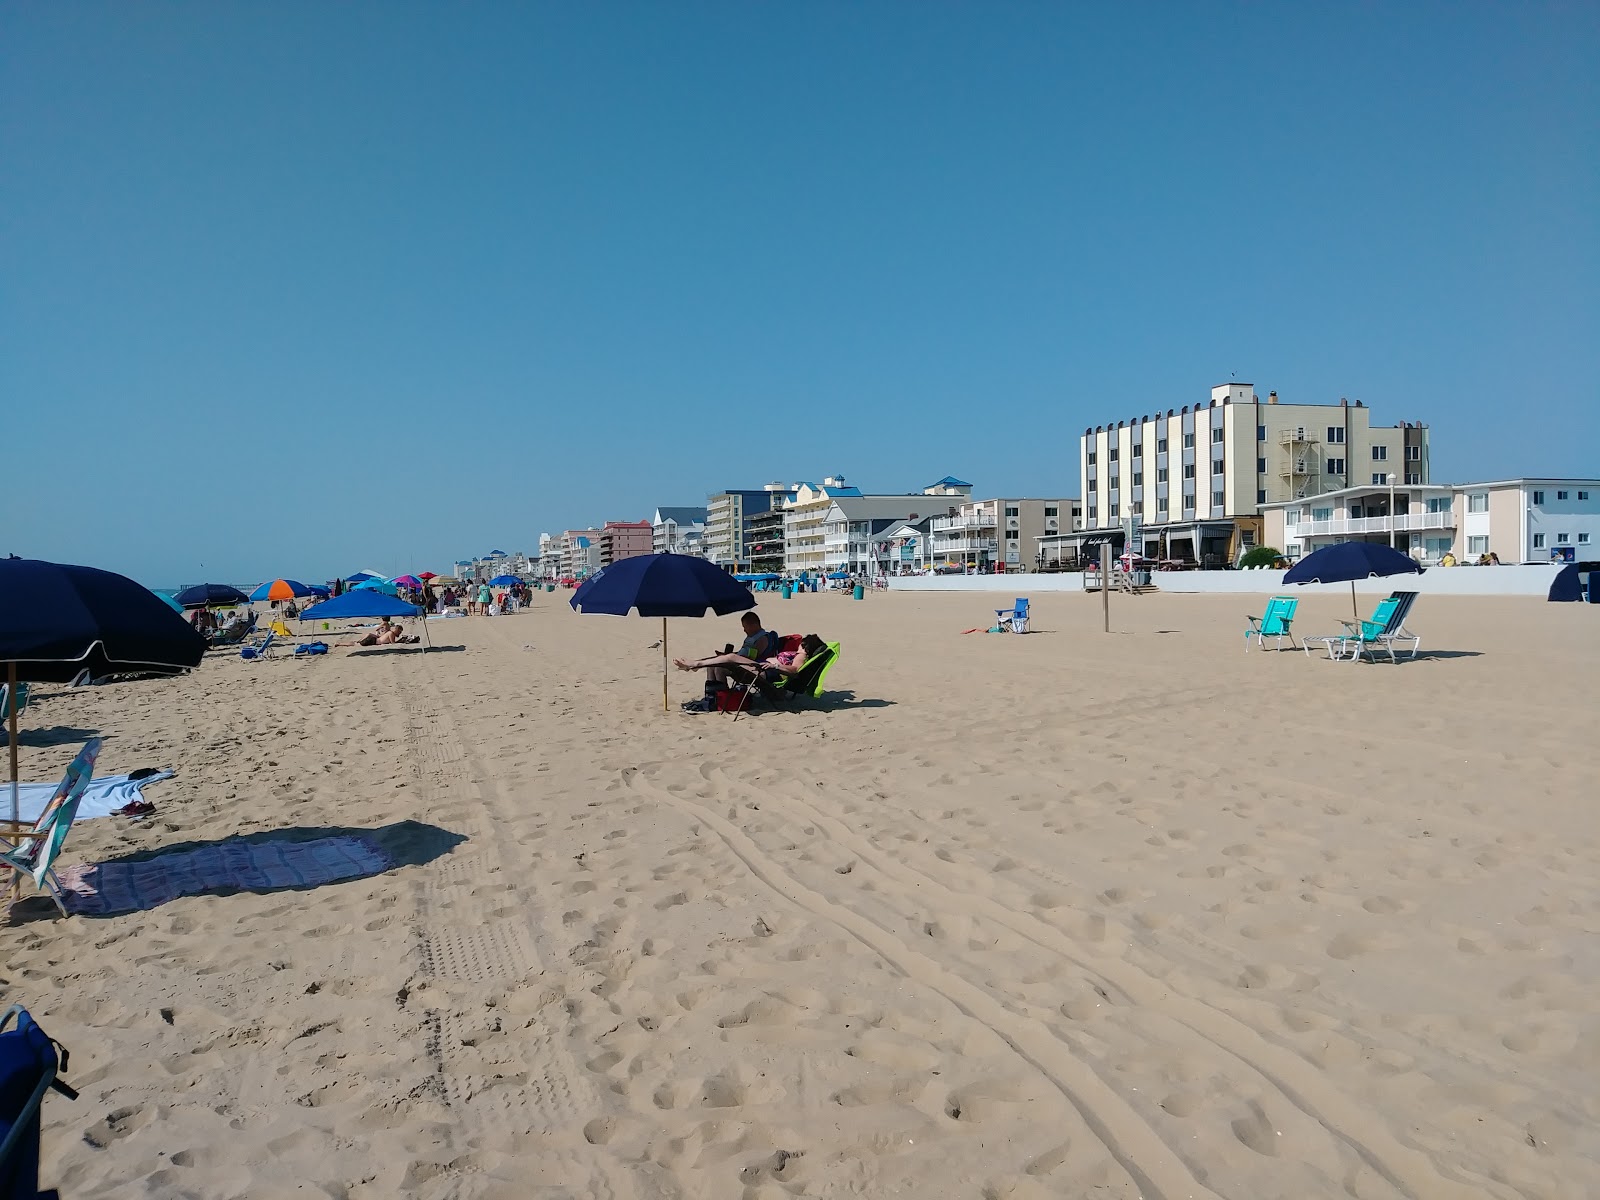 Foto de Ocean City beach III - lugar popular entre os apreciadores de relaxamento